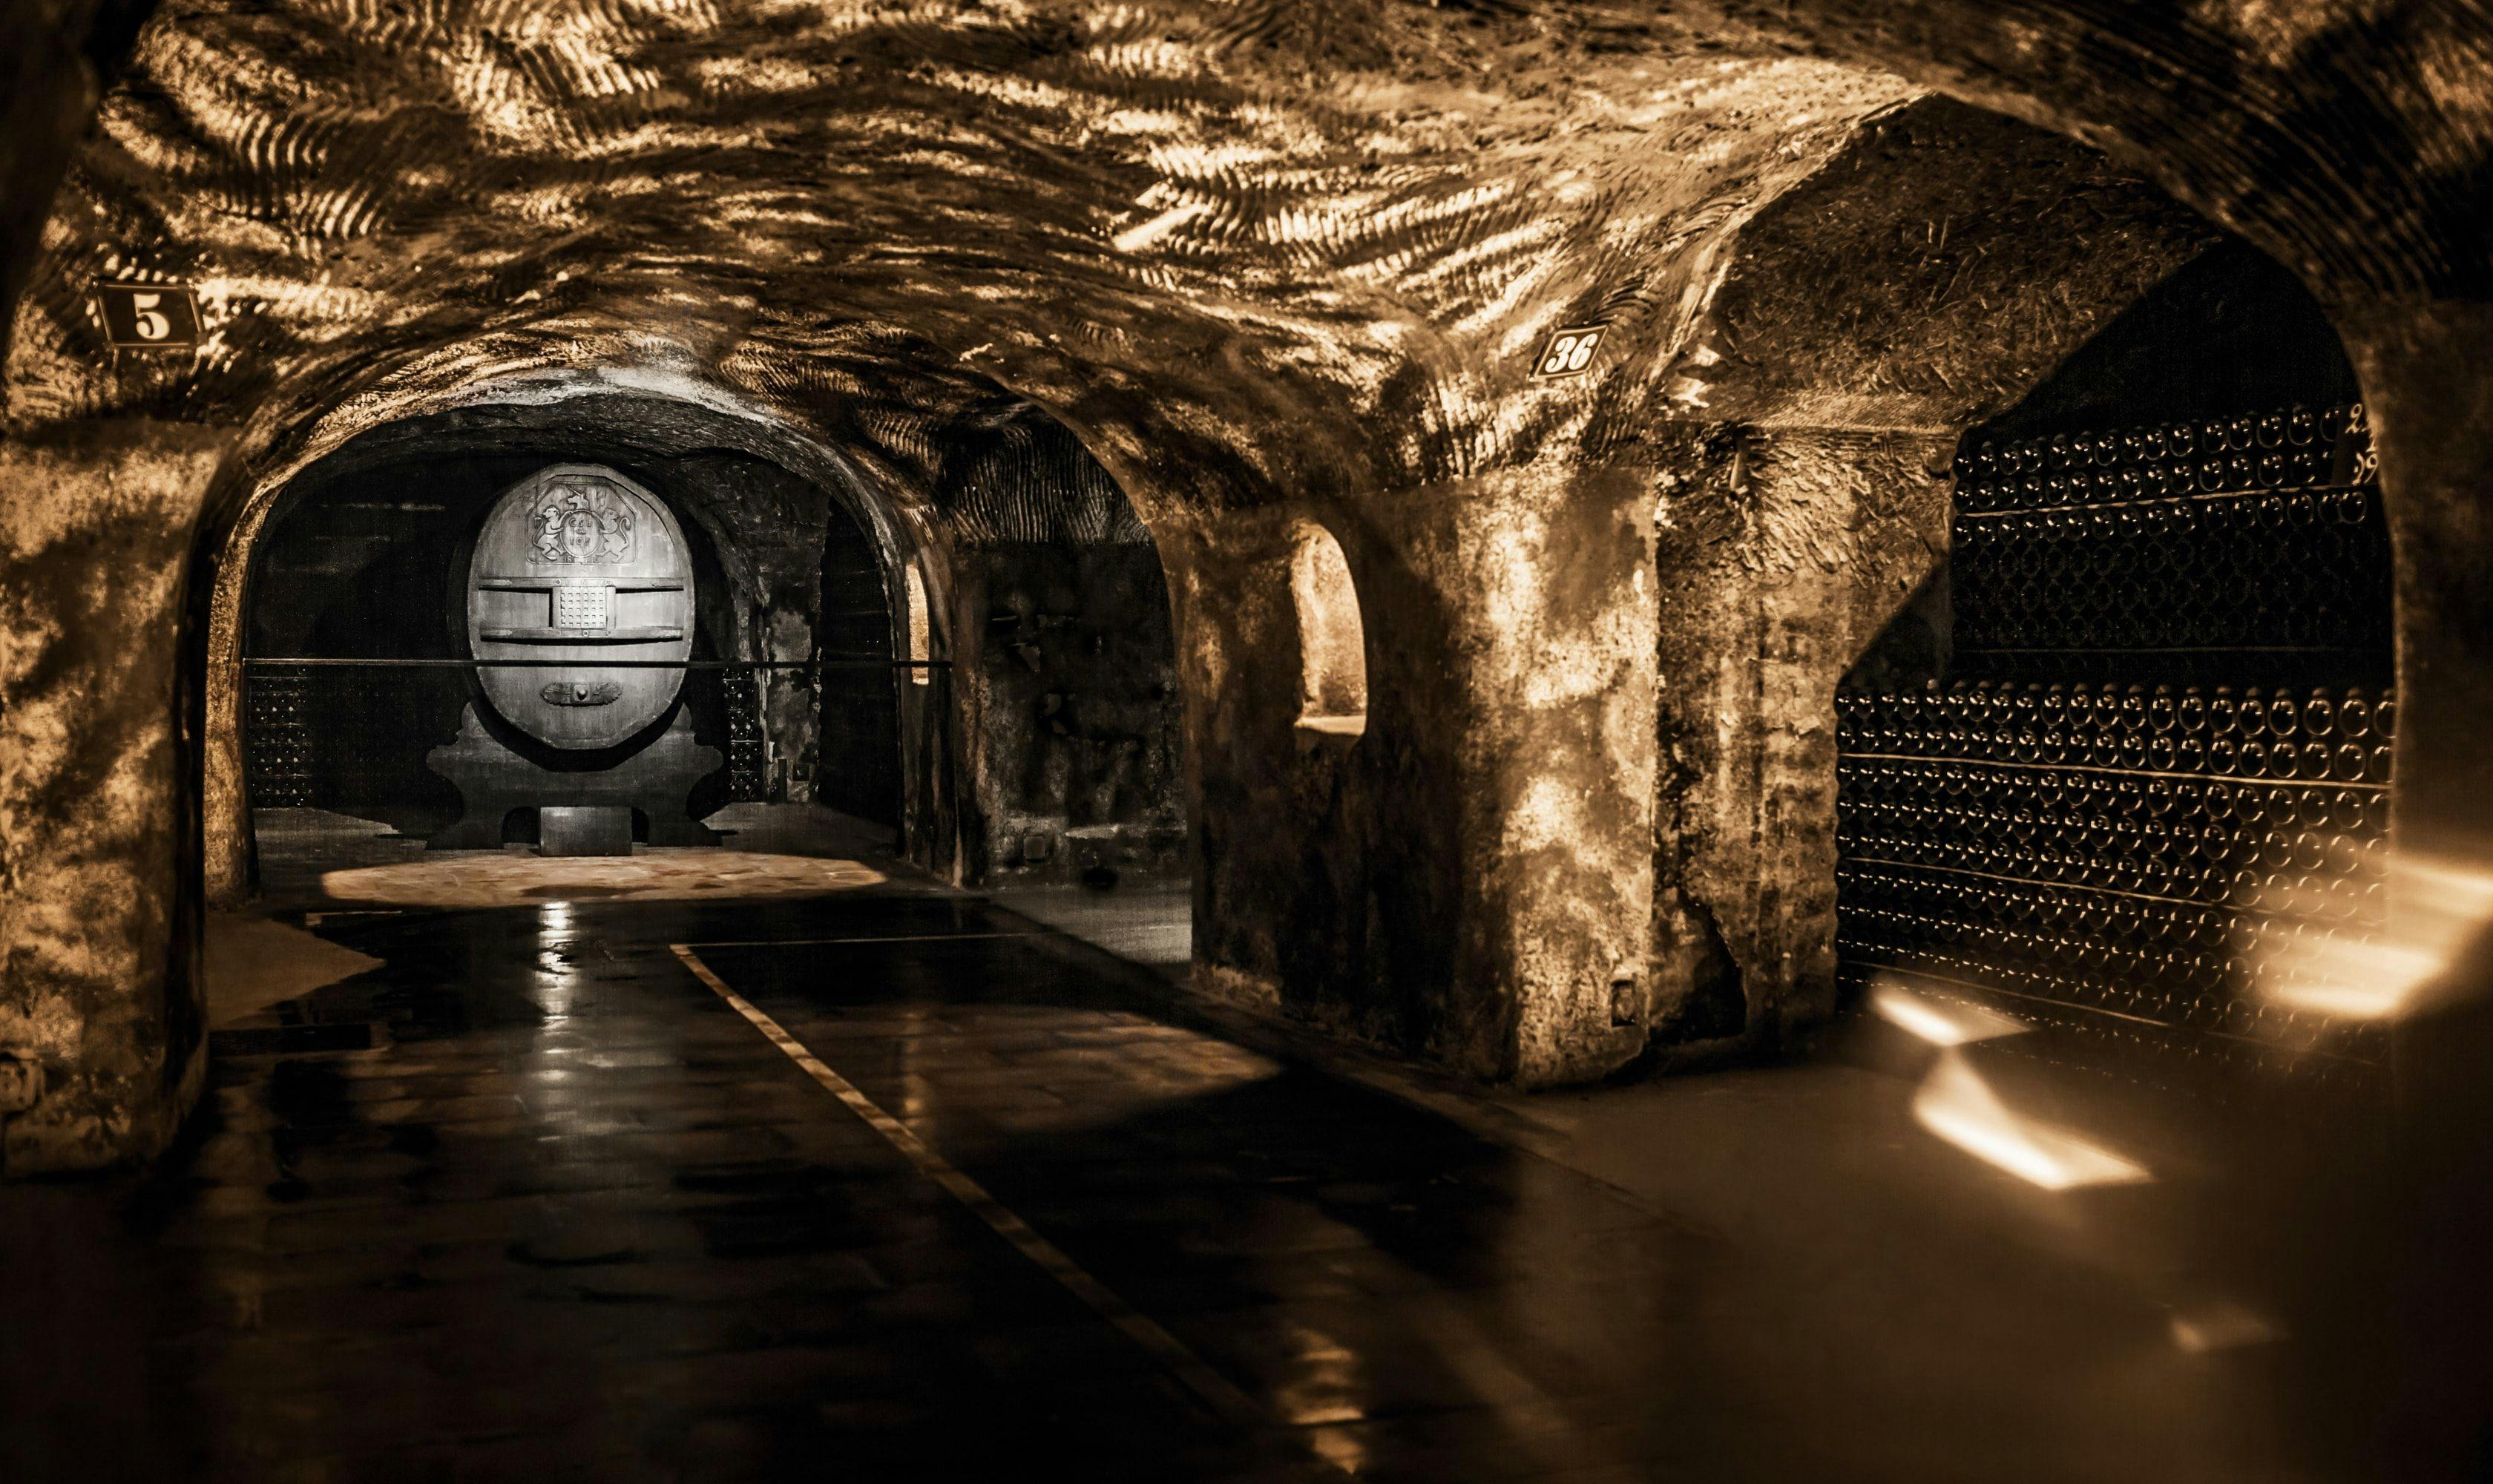 Moët & Chandon wine cellar in Epernay France.